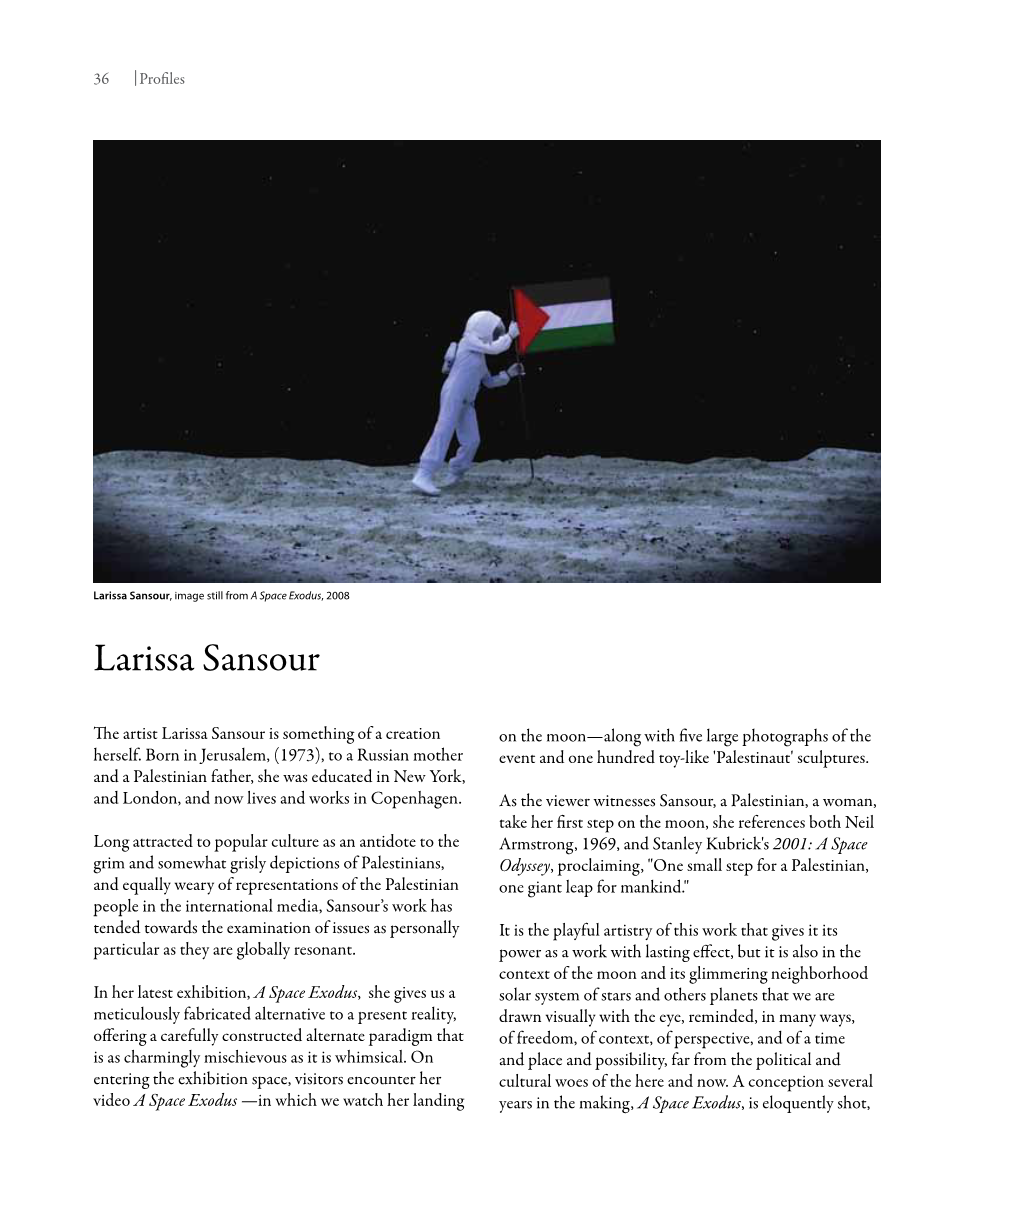 Larissa Sansour, Image Still from a Space Exodus, 2008